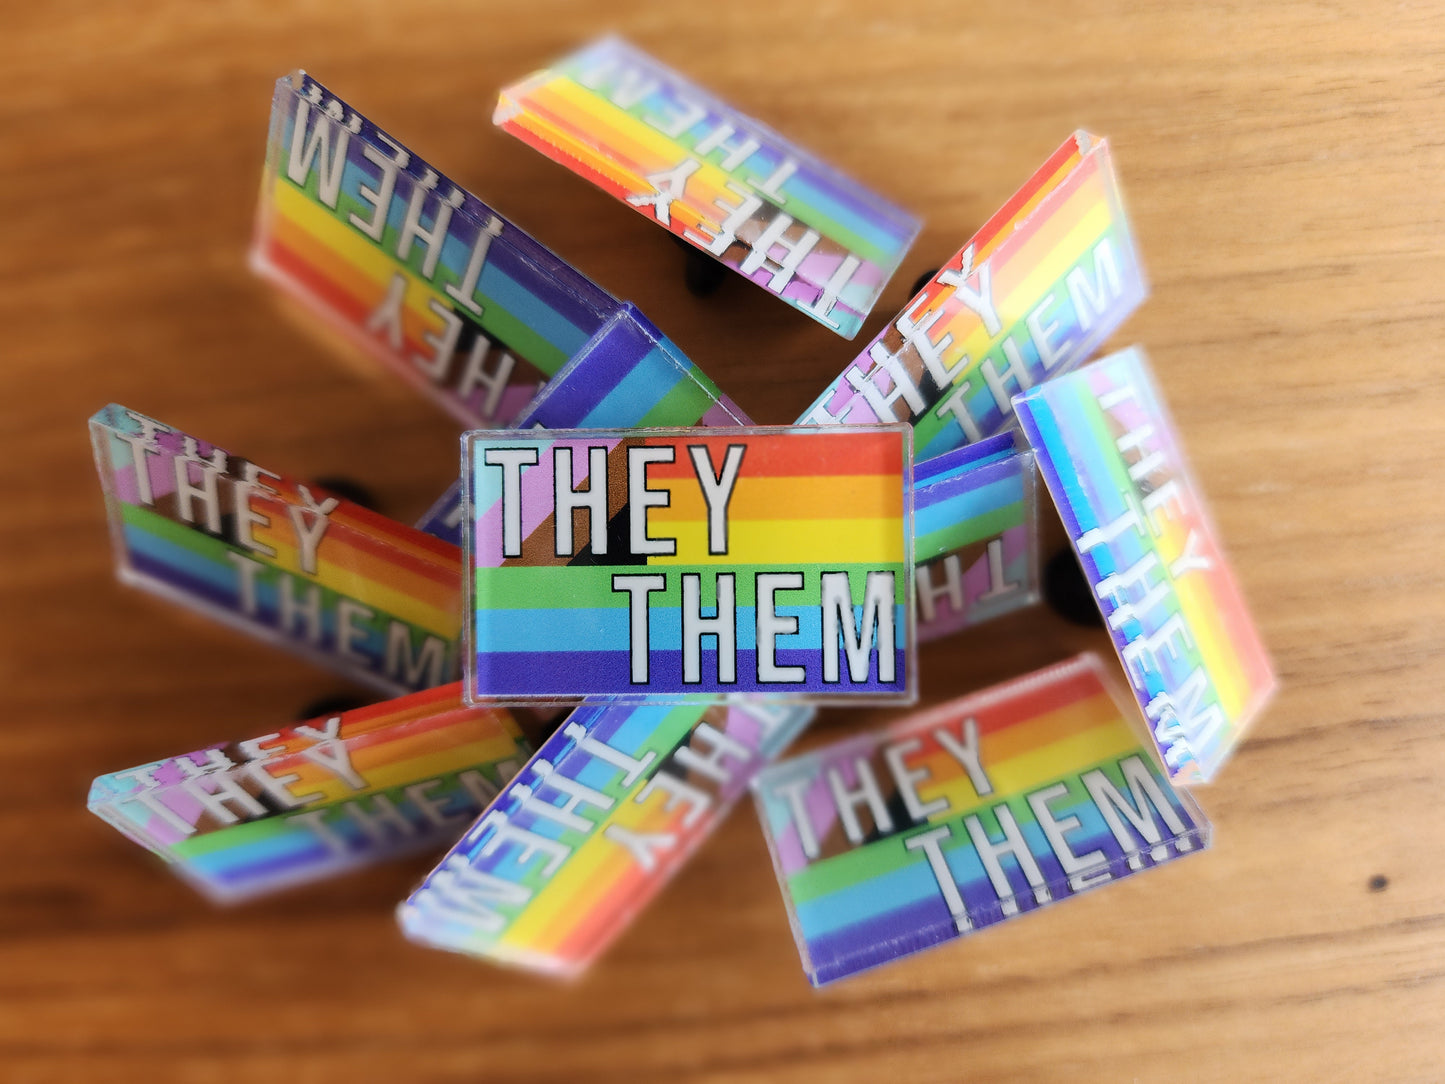 Pronoun Pins - Pride Rainbow Flag